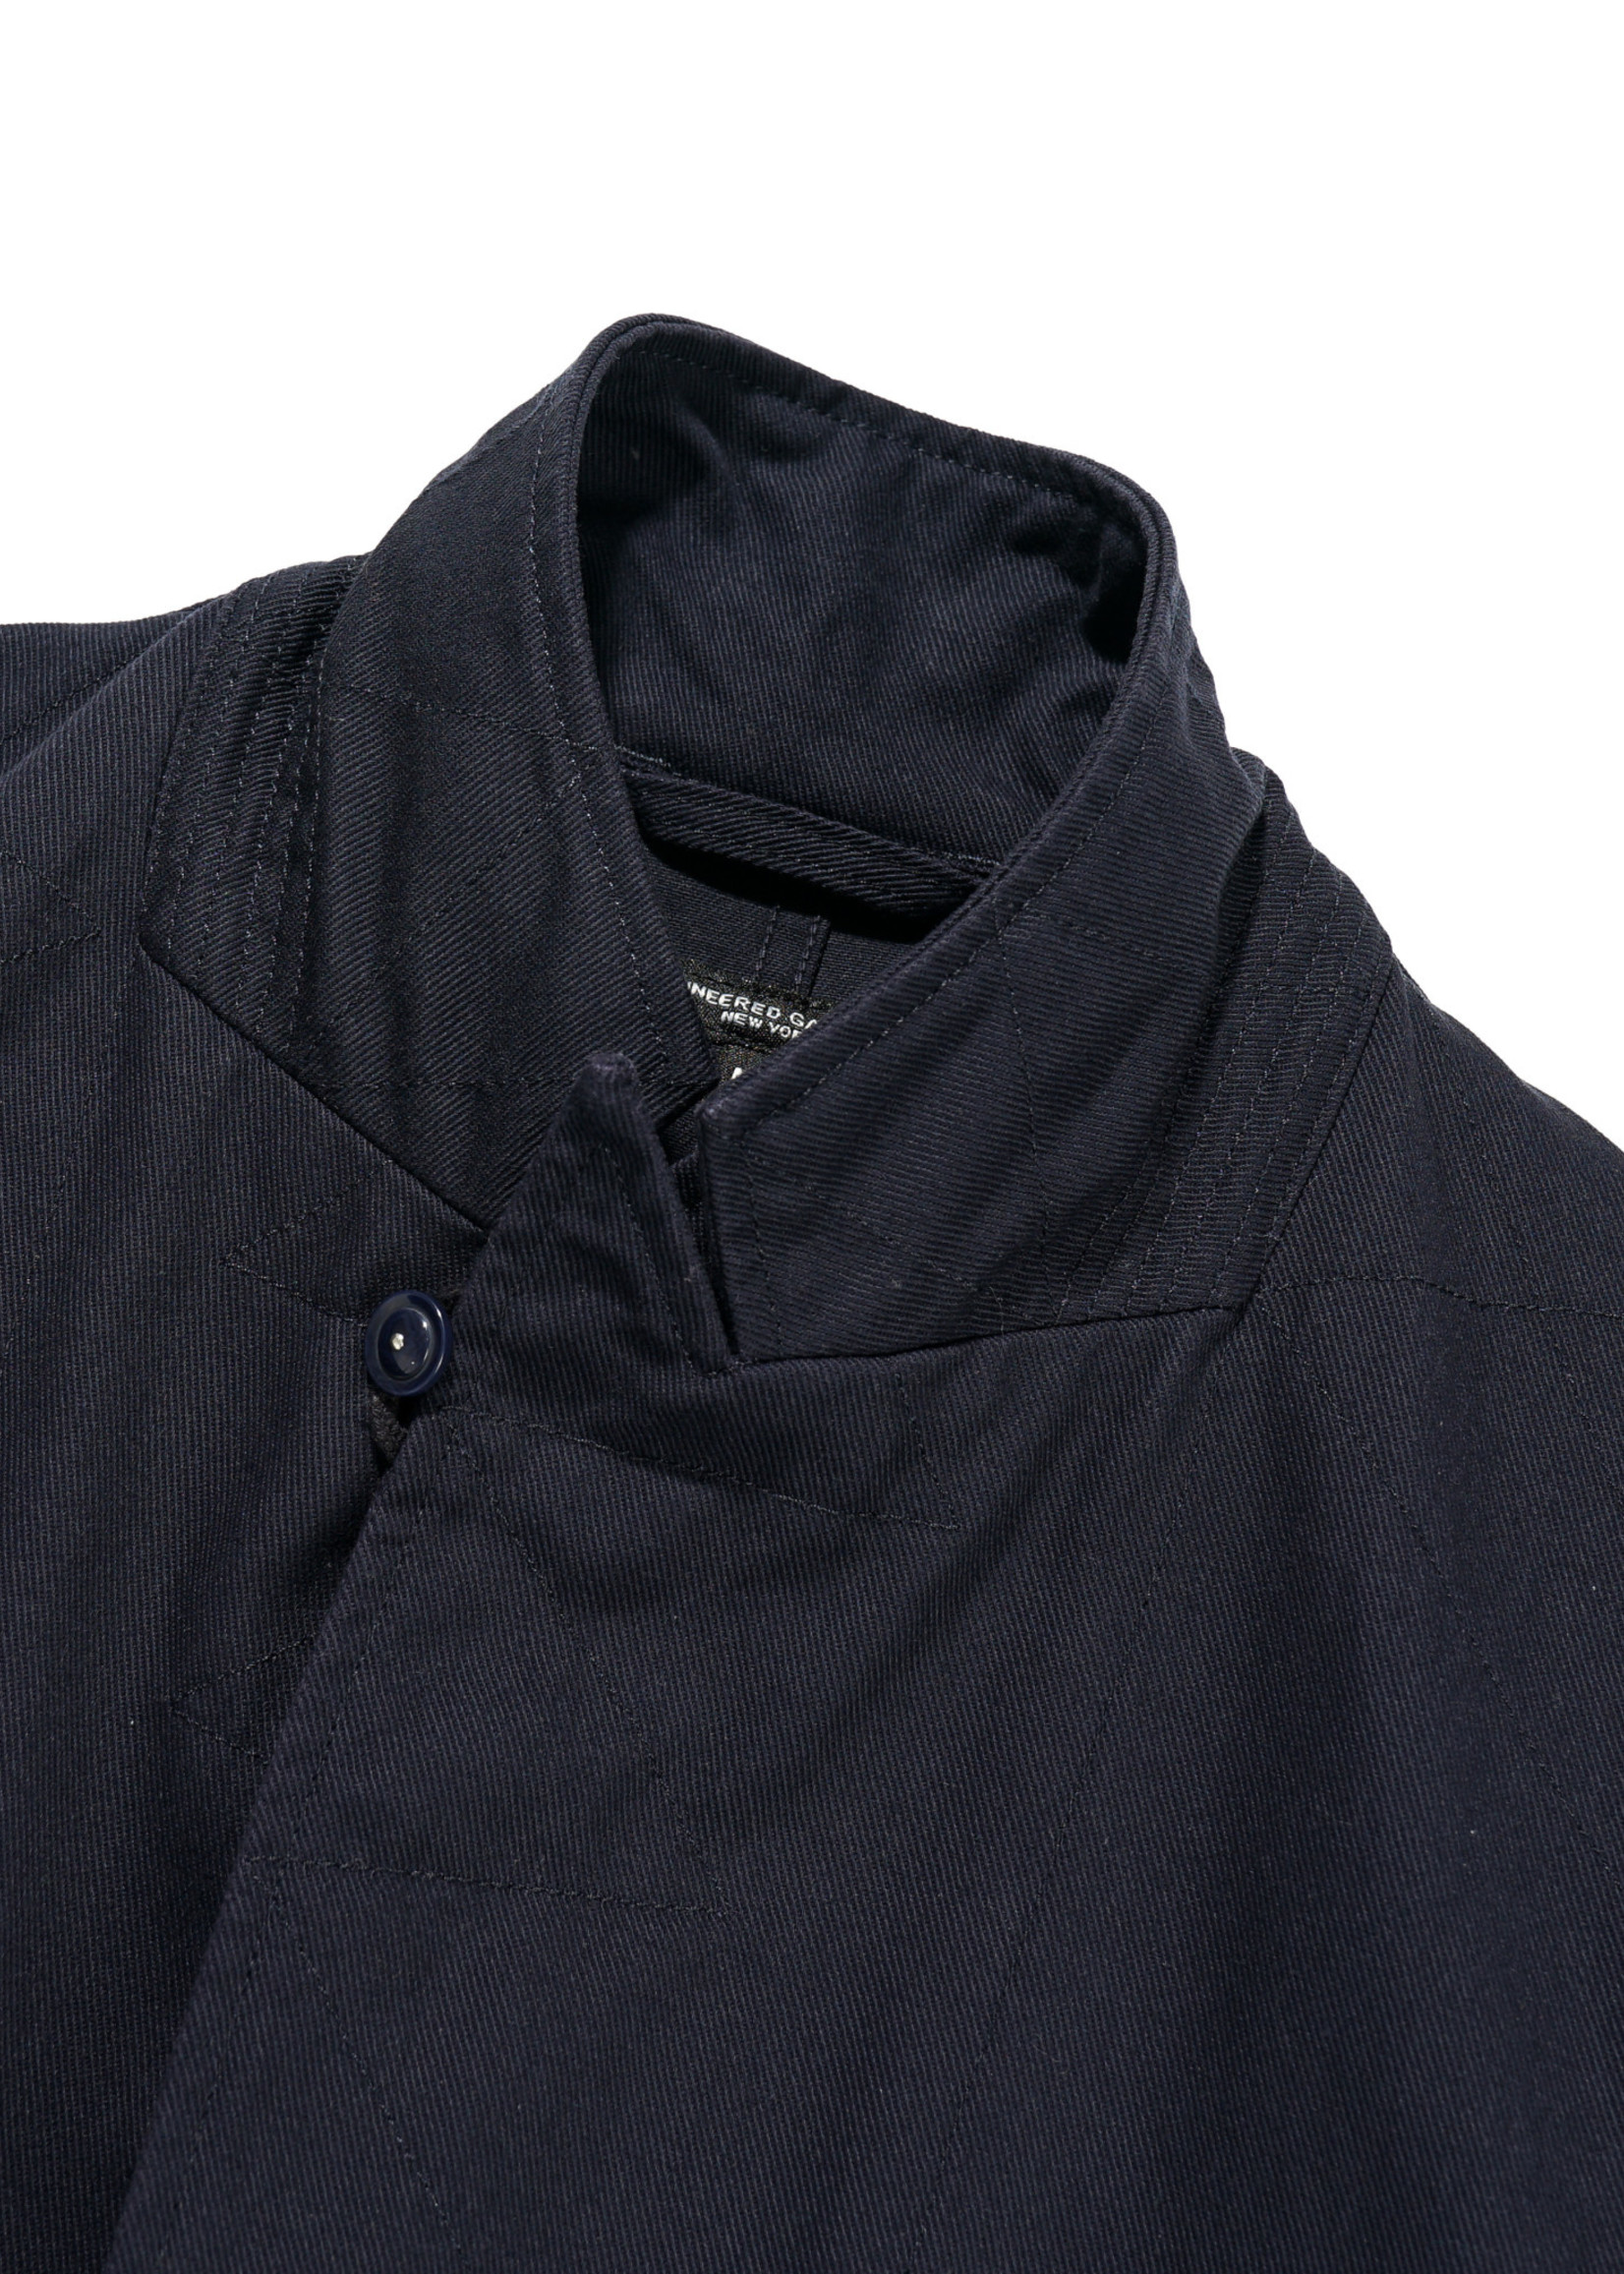 Engineered Garments EG Bedford Jacket Dk. Navy Cotton Herringbone Twill